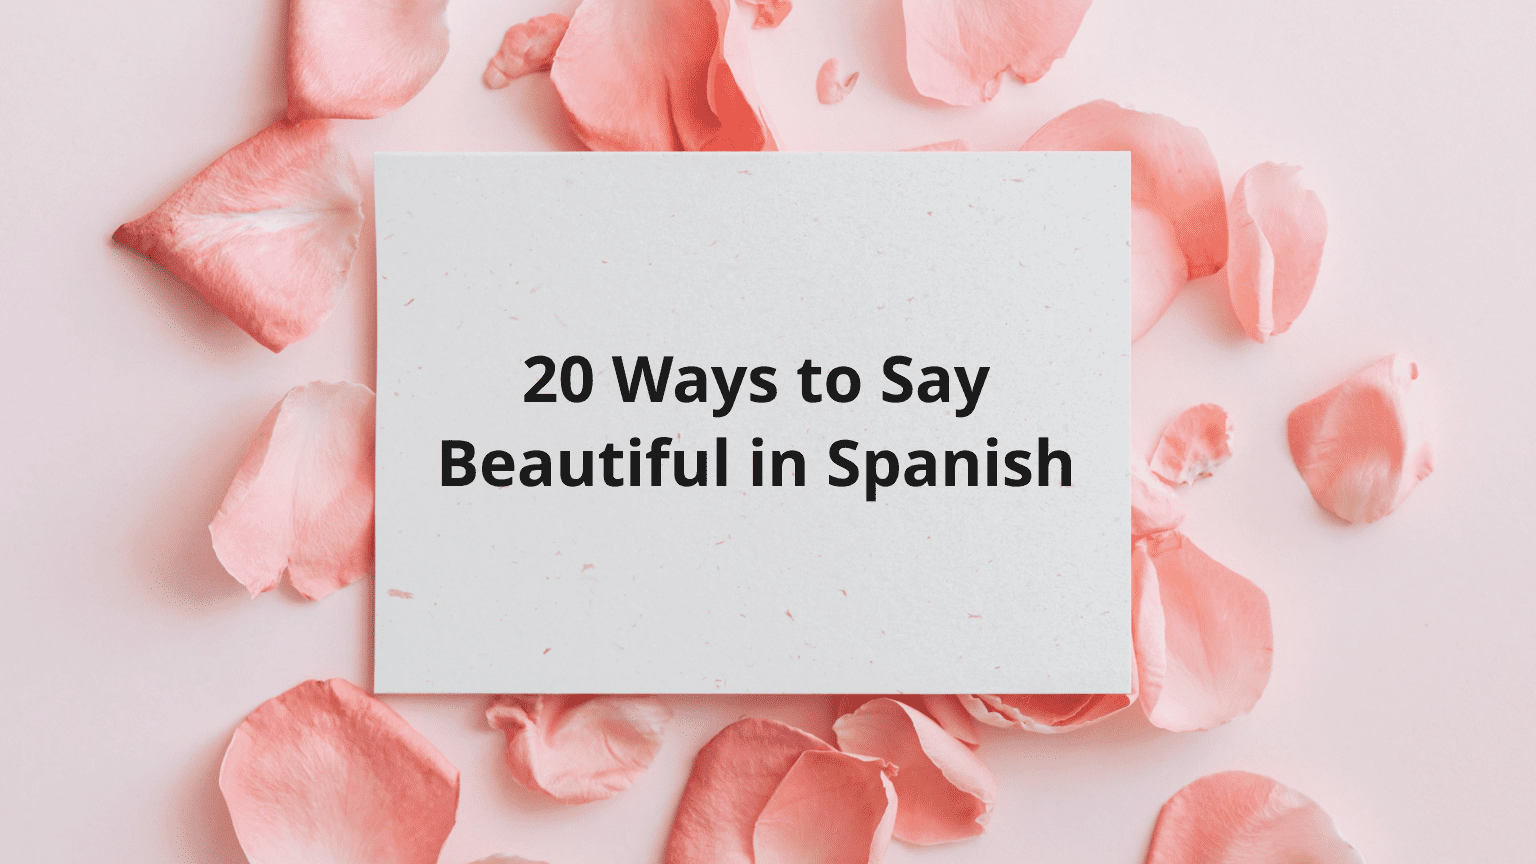 20 Ways to Call your Partner Beautiful in Spanish - Bella & Más!